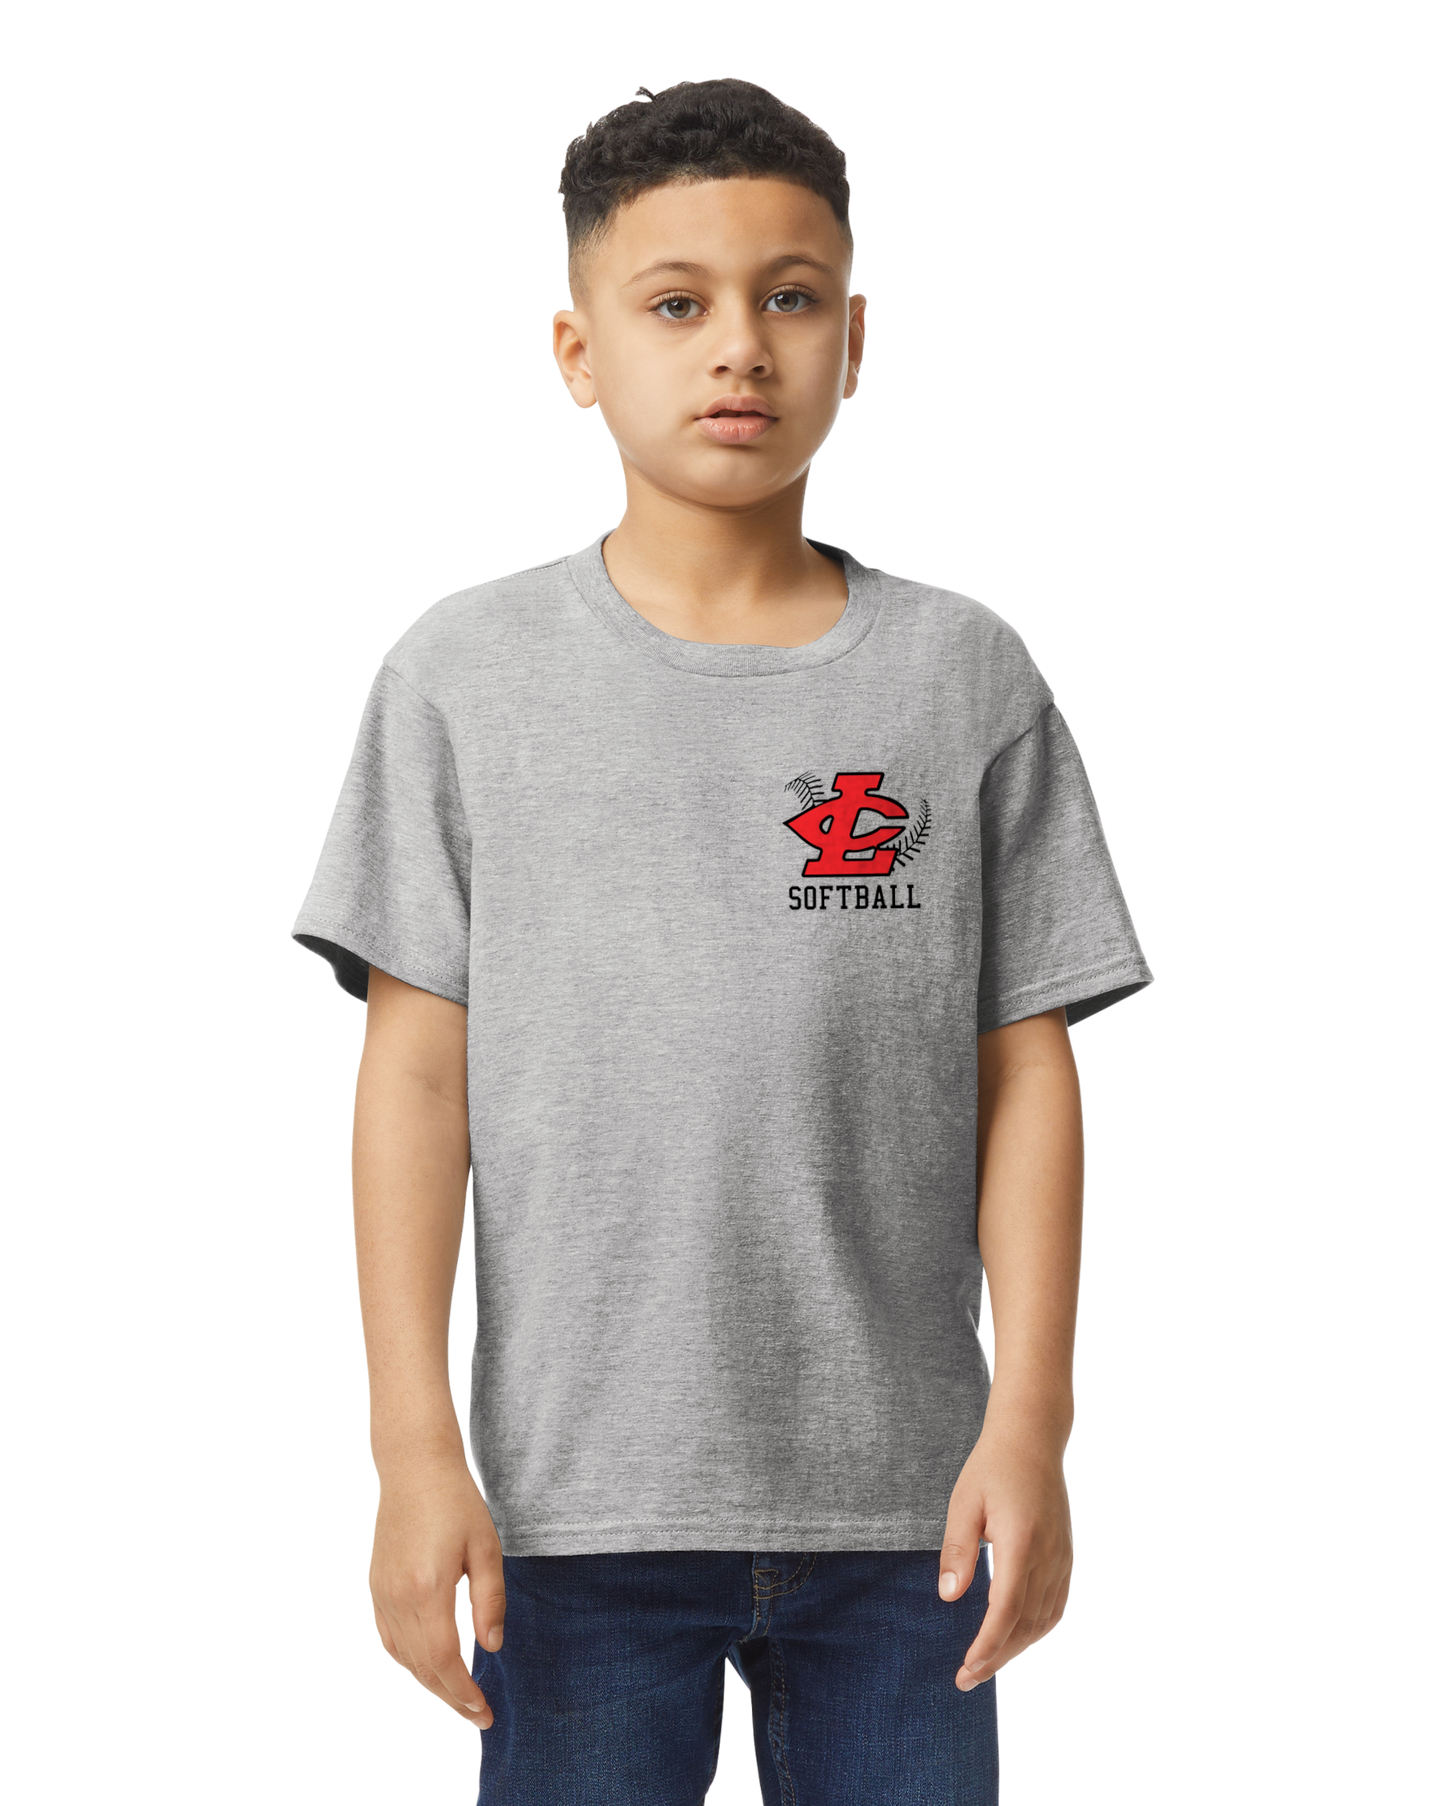 CLLL Softball - Youth Gildan Softstyle tshirt - GRAY